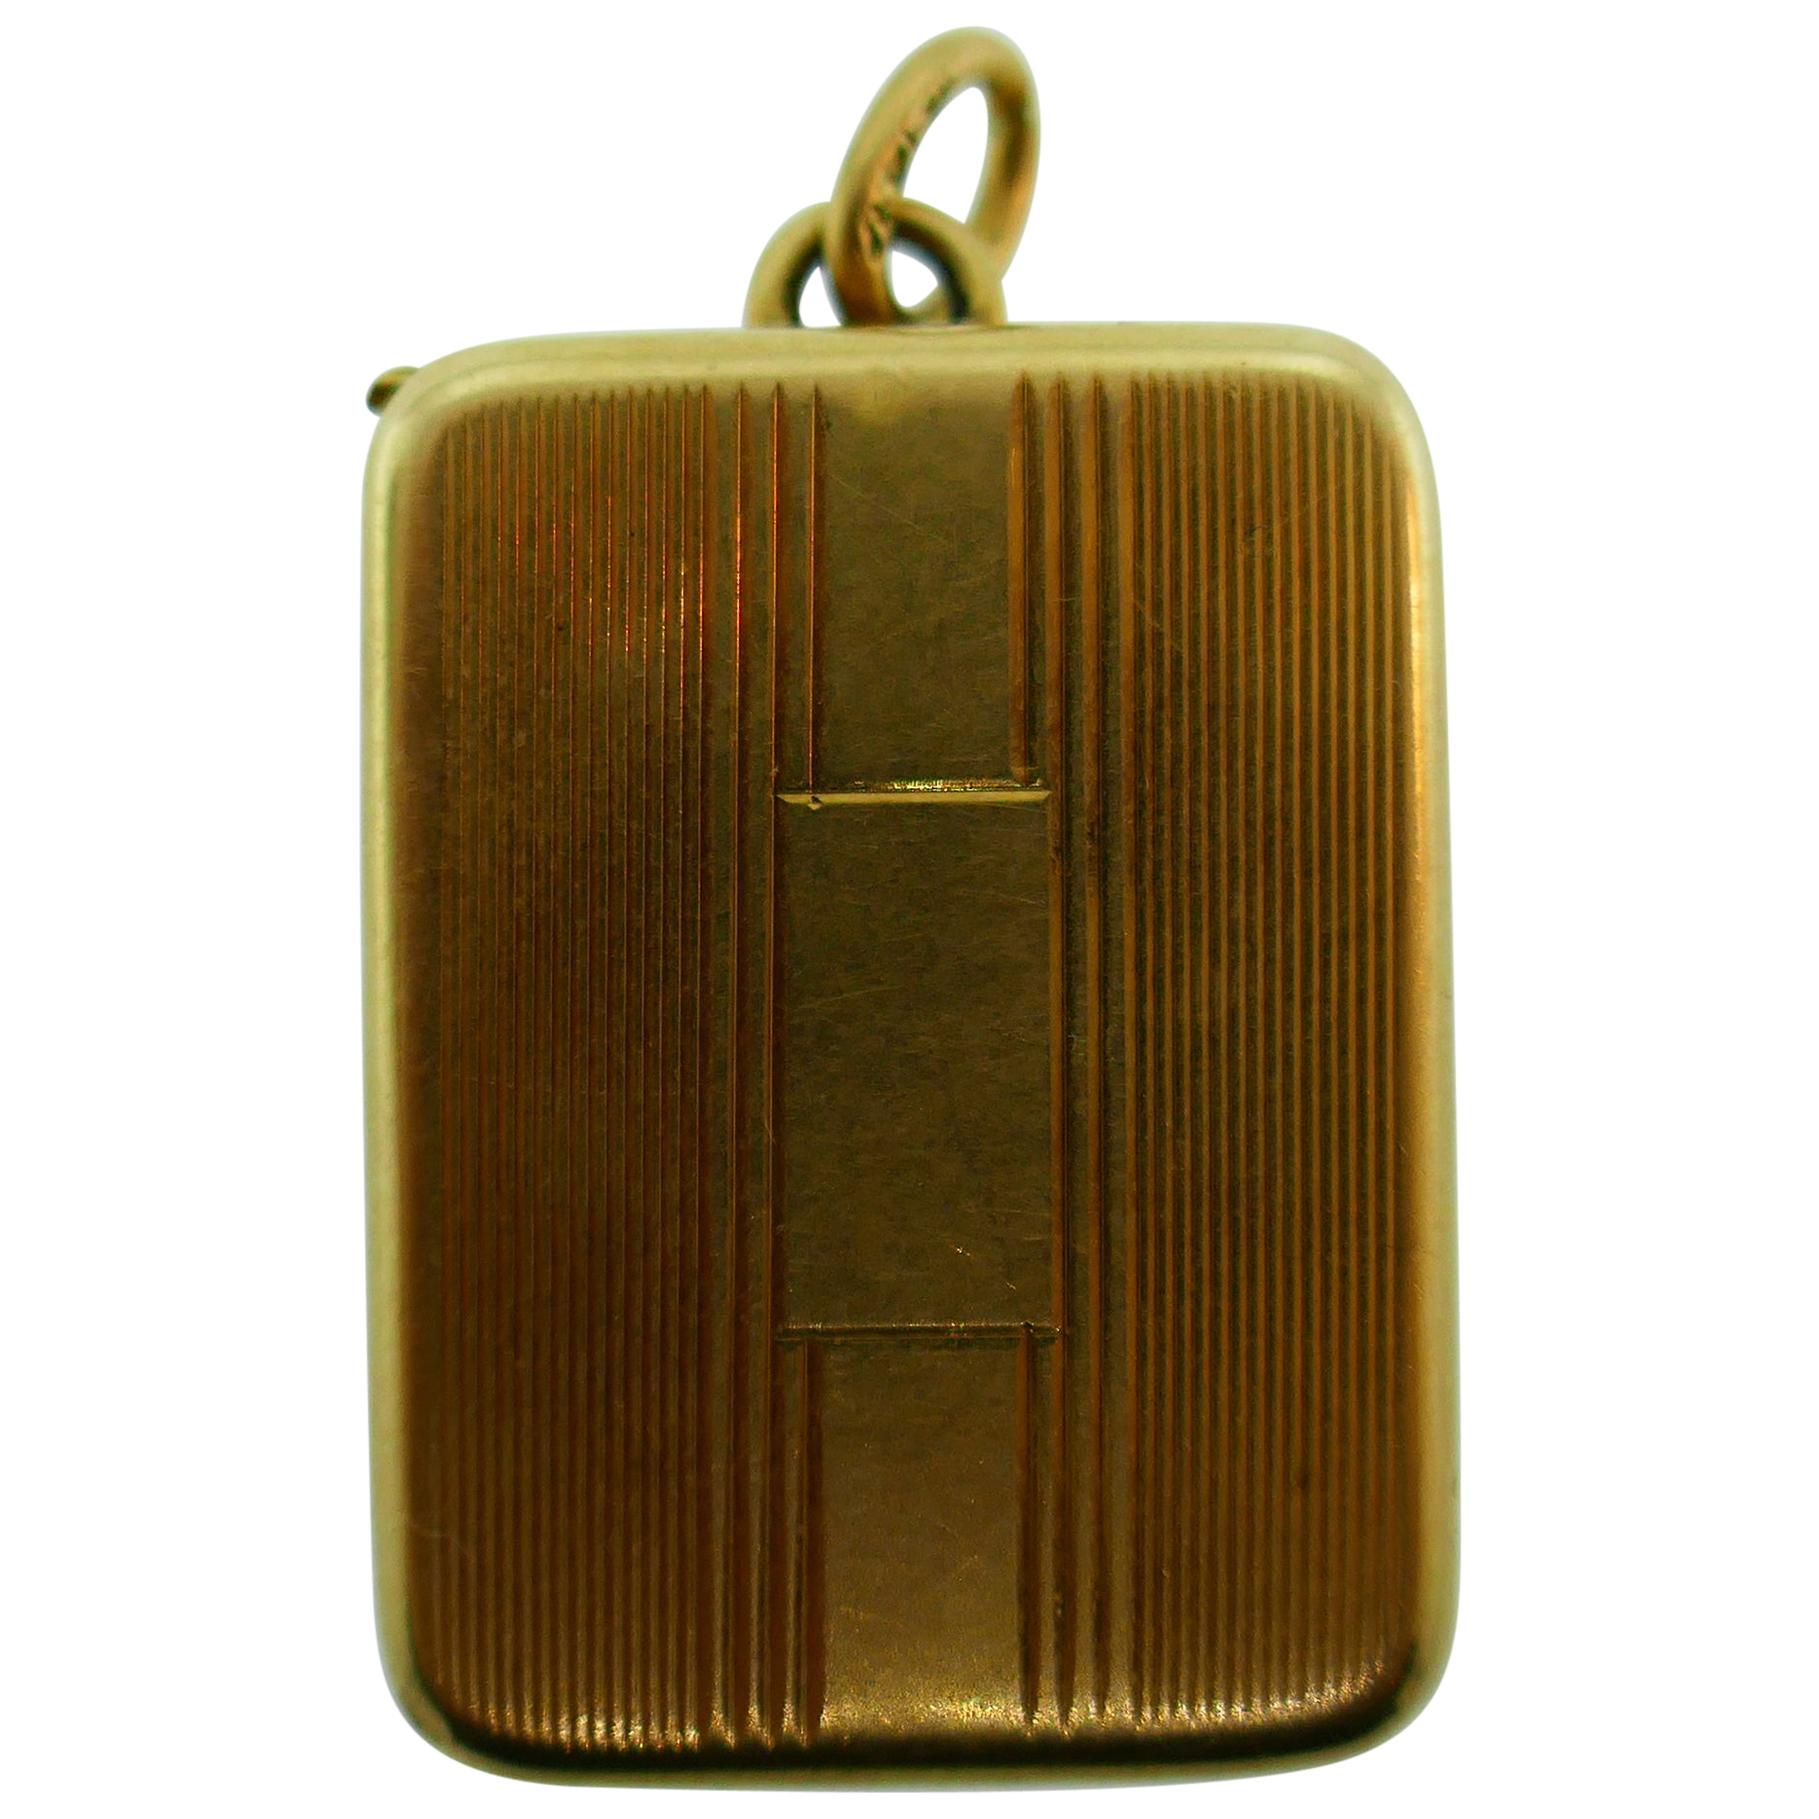 Tiffany & Co. Antique 14k Yellow Gold Locket / Pill Box Pendant Charm, c. 1930s